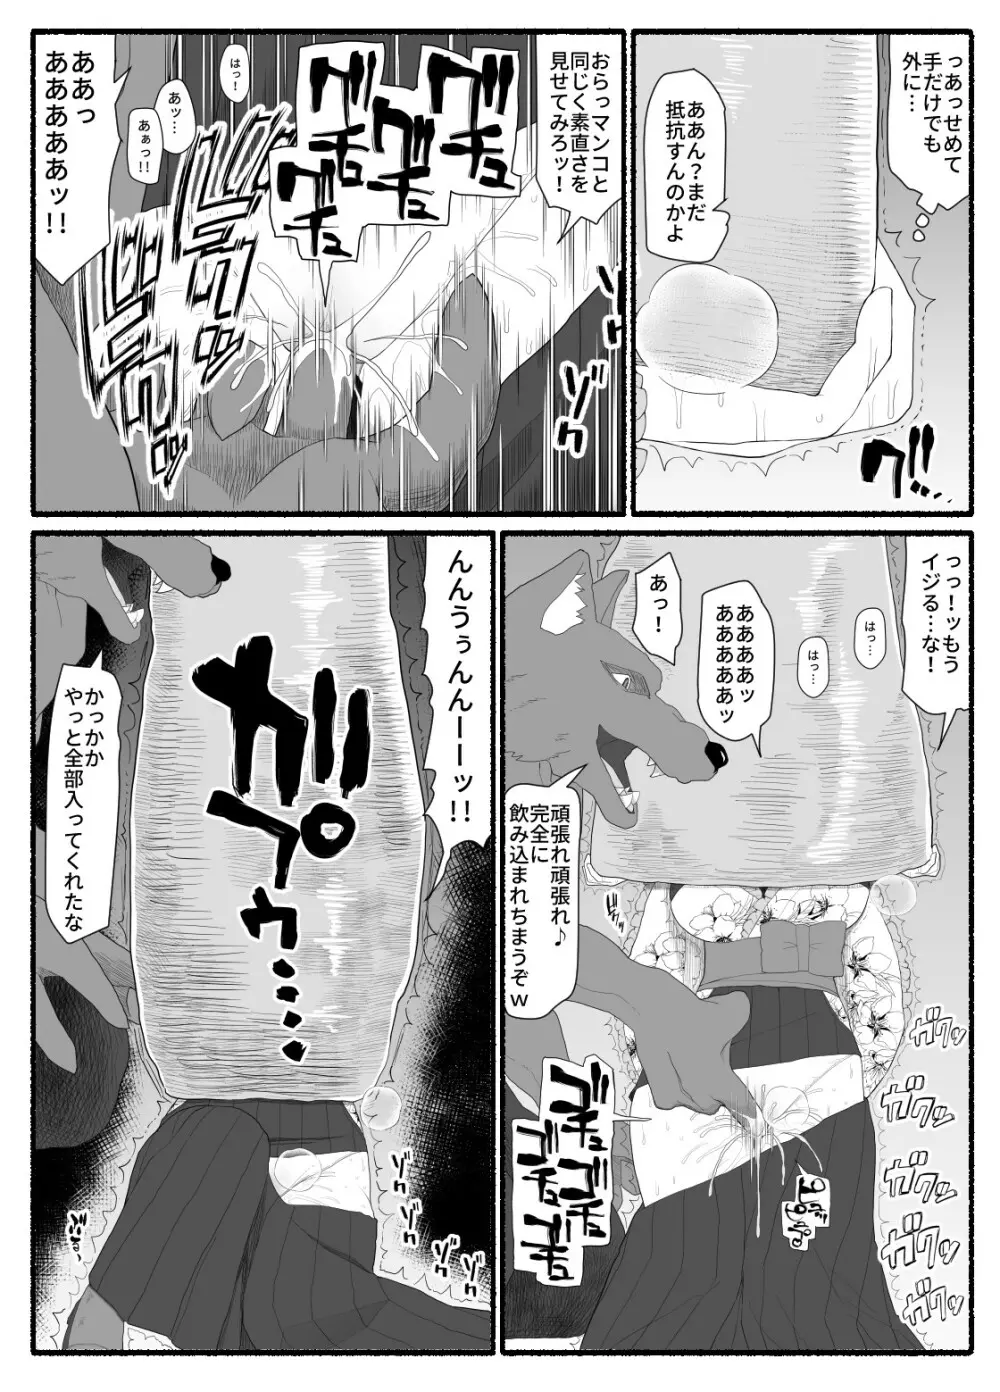 魔法少女vs淫魔生物6 16ページ